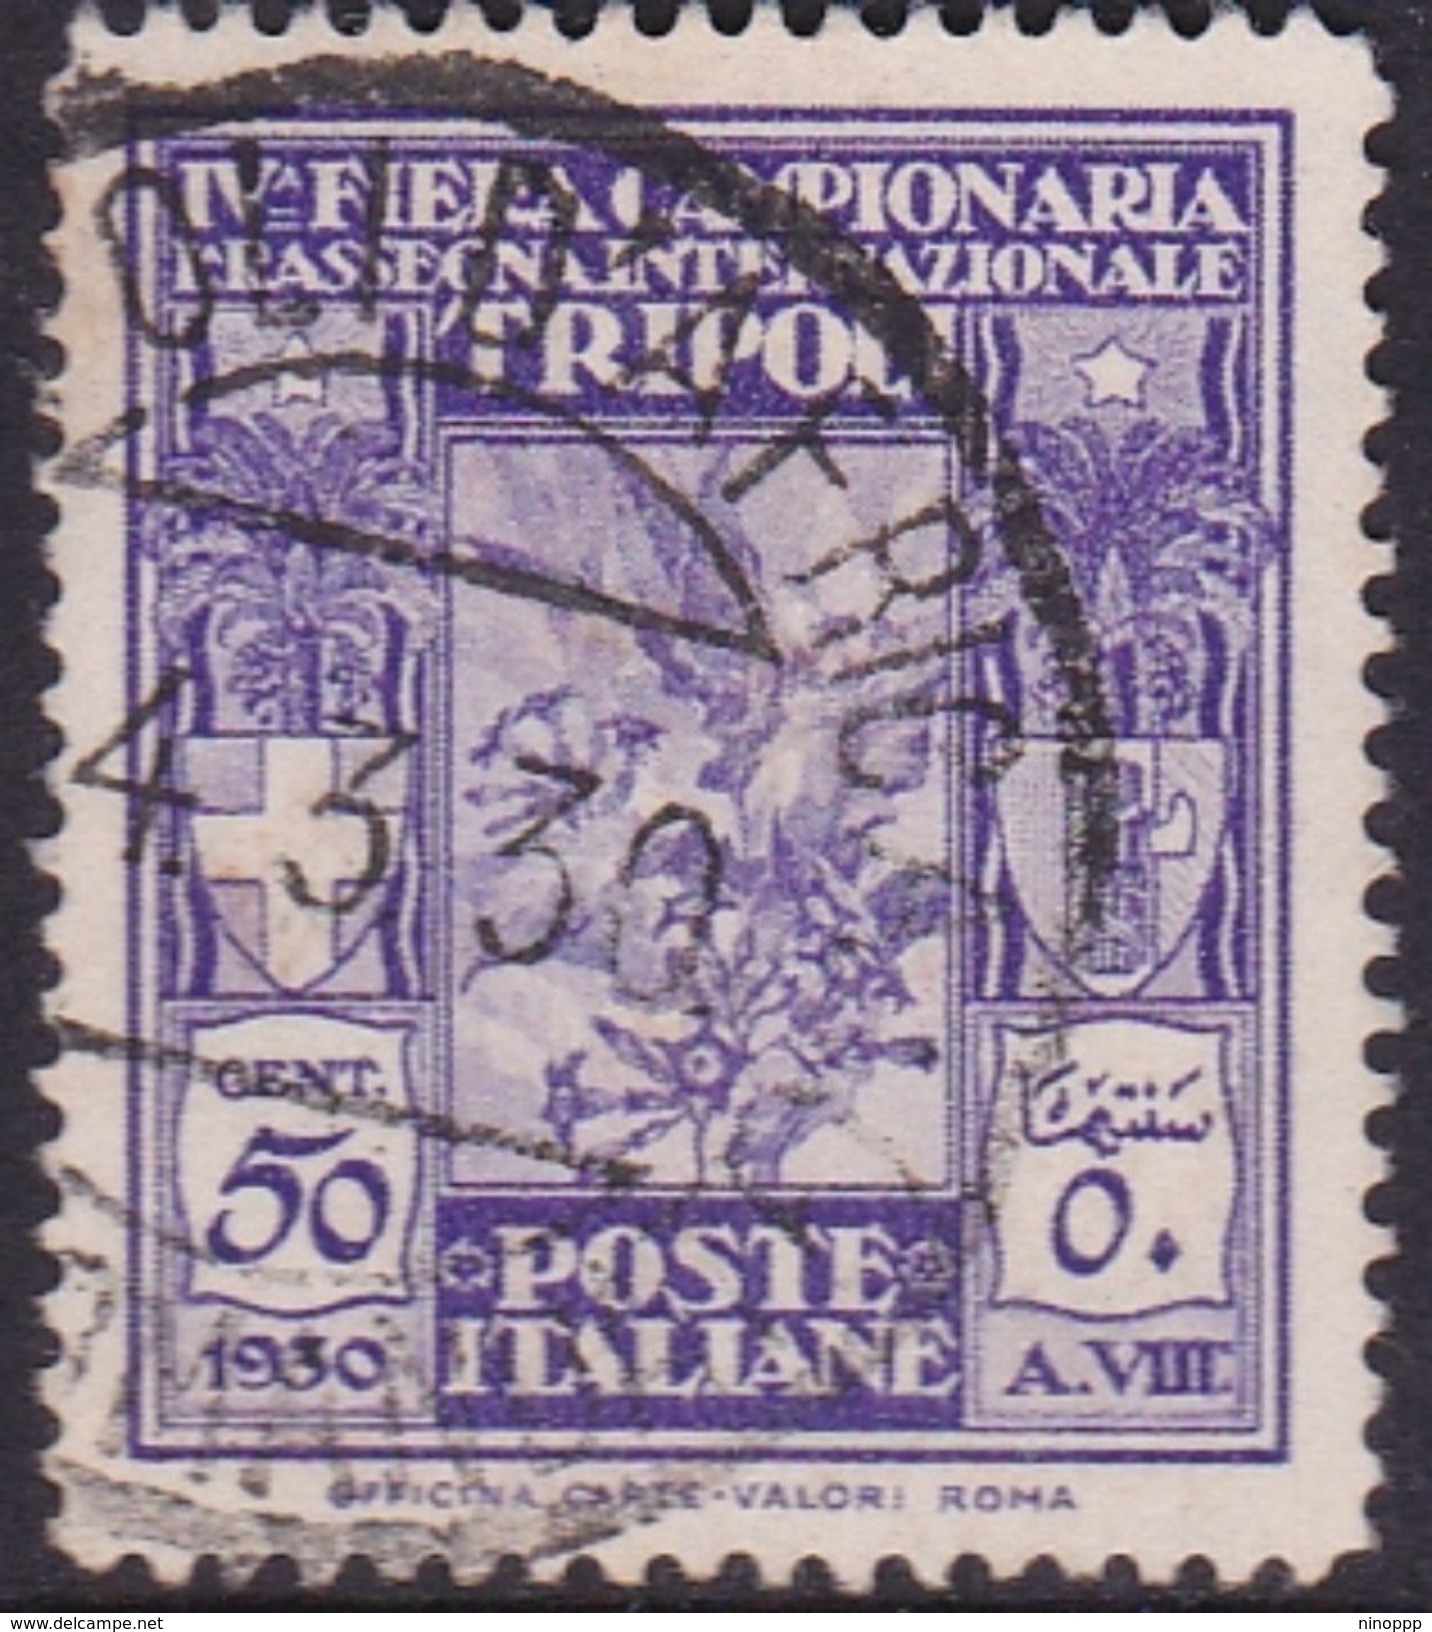 Italy-Colonies And Territories-Libya S 88 1930 4th Tripoli Fair,50c Used - Libya